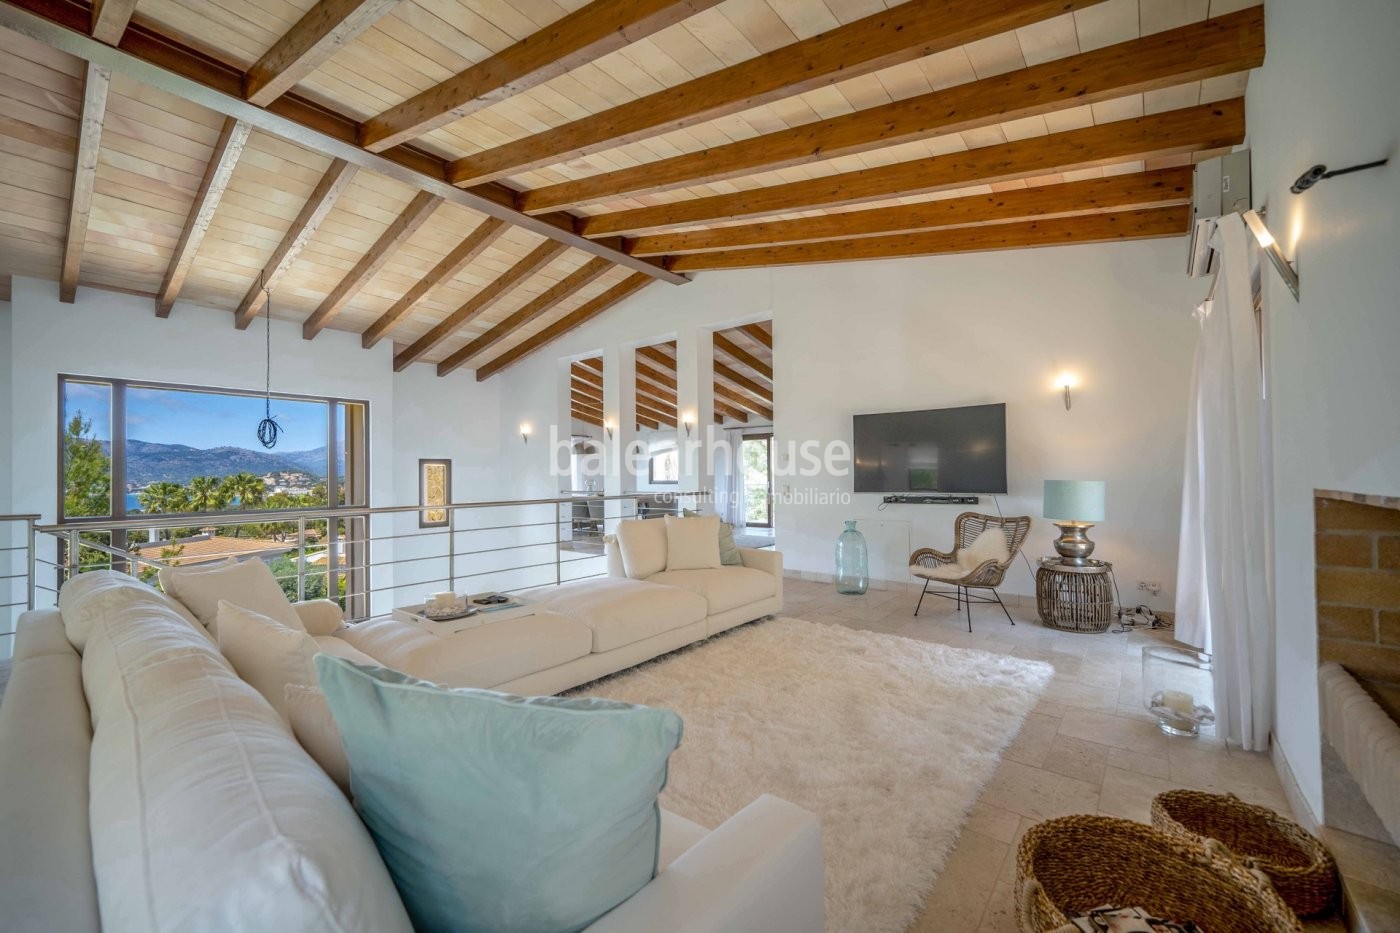 Villa with elegant, modern Mediterranean architecture in Santa Ponsa with views to the sea